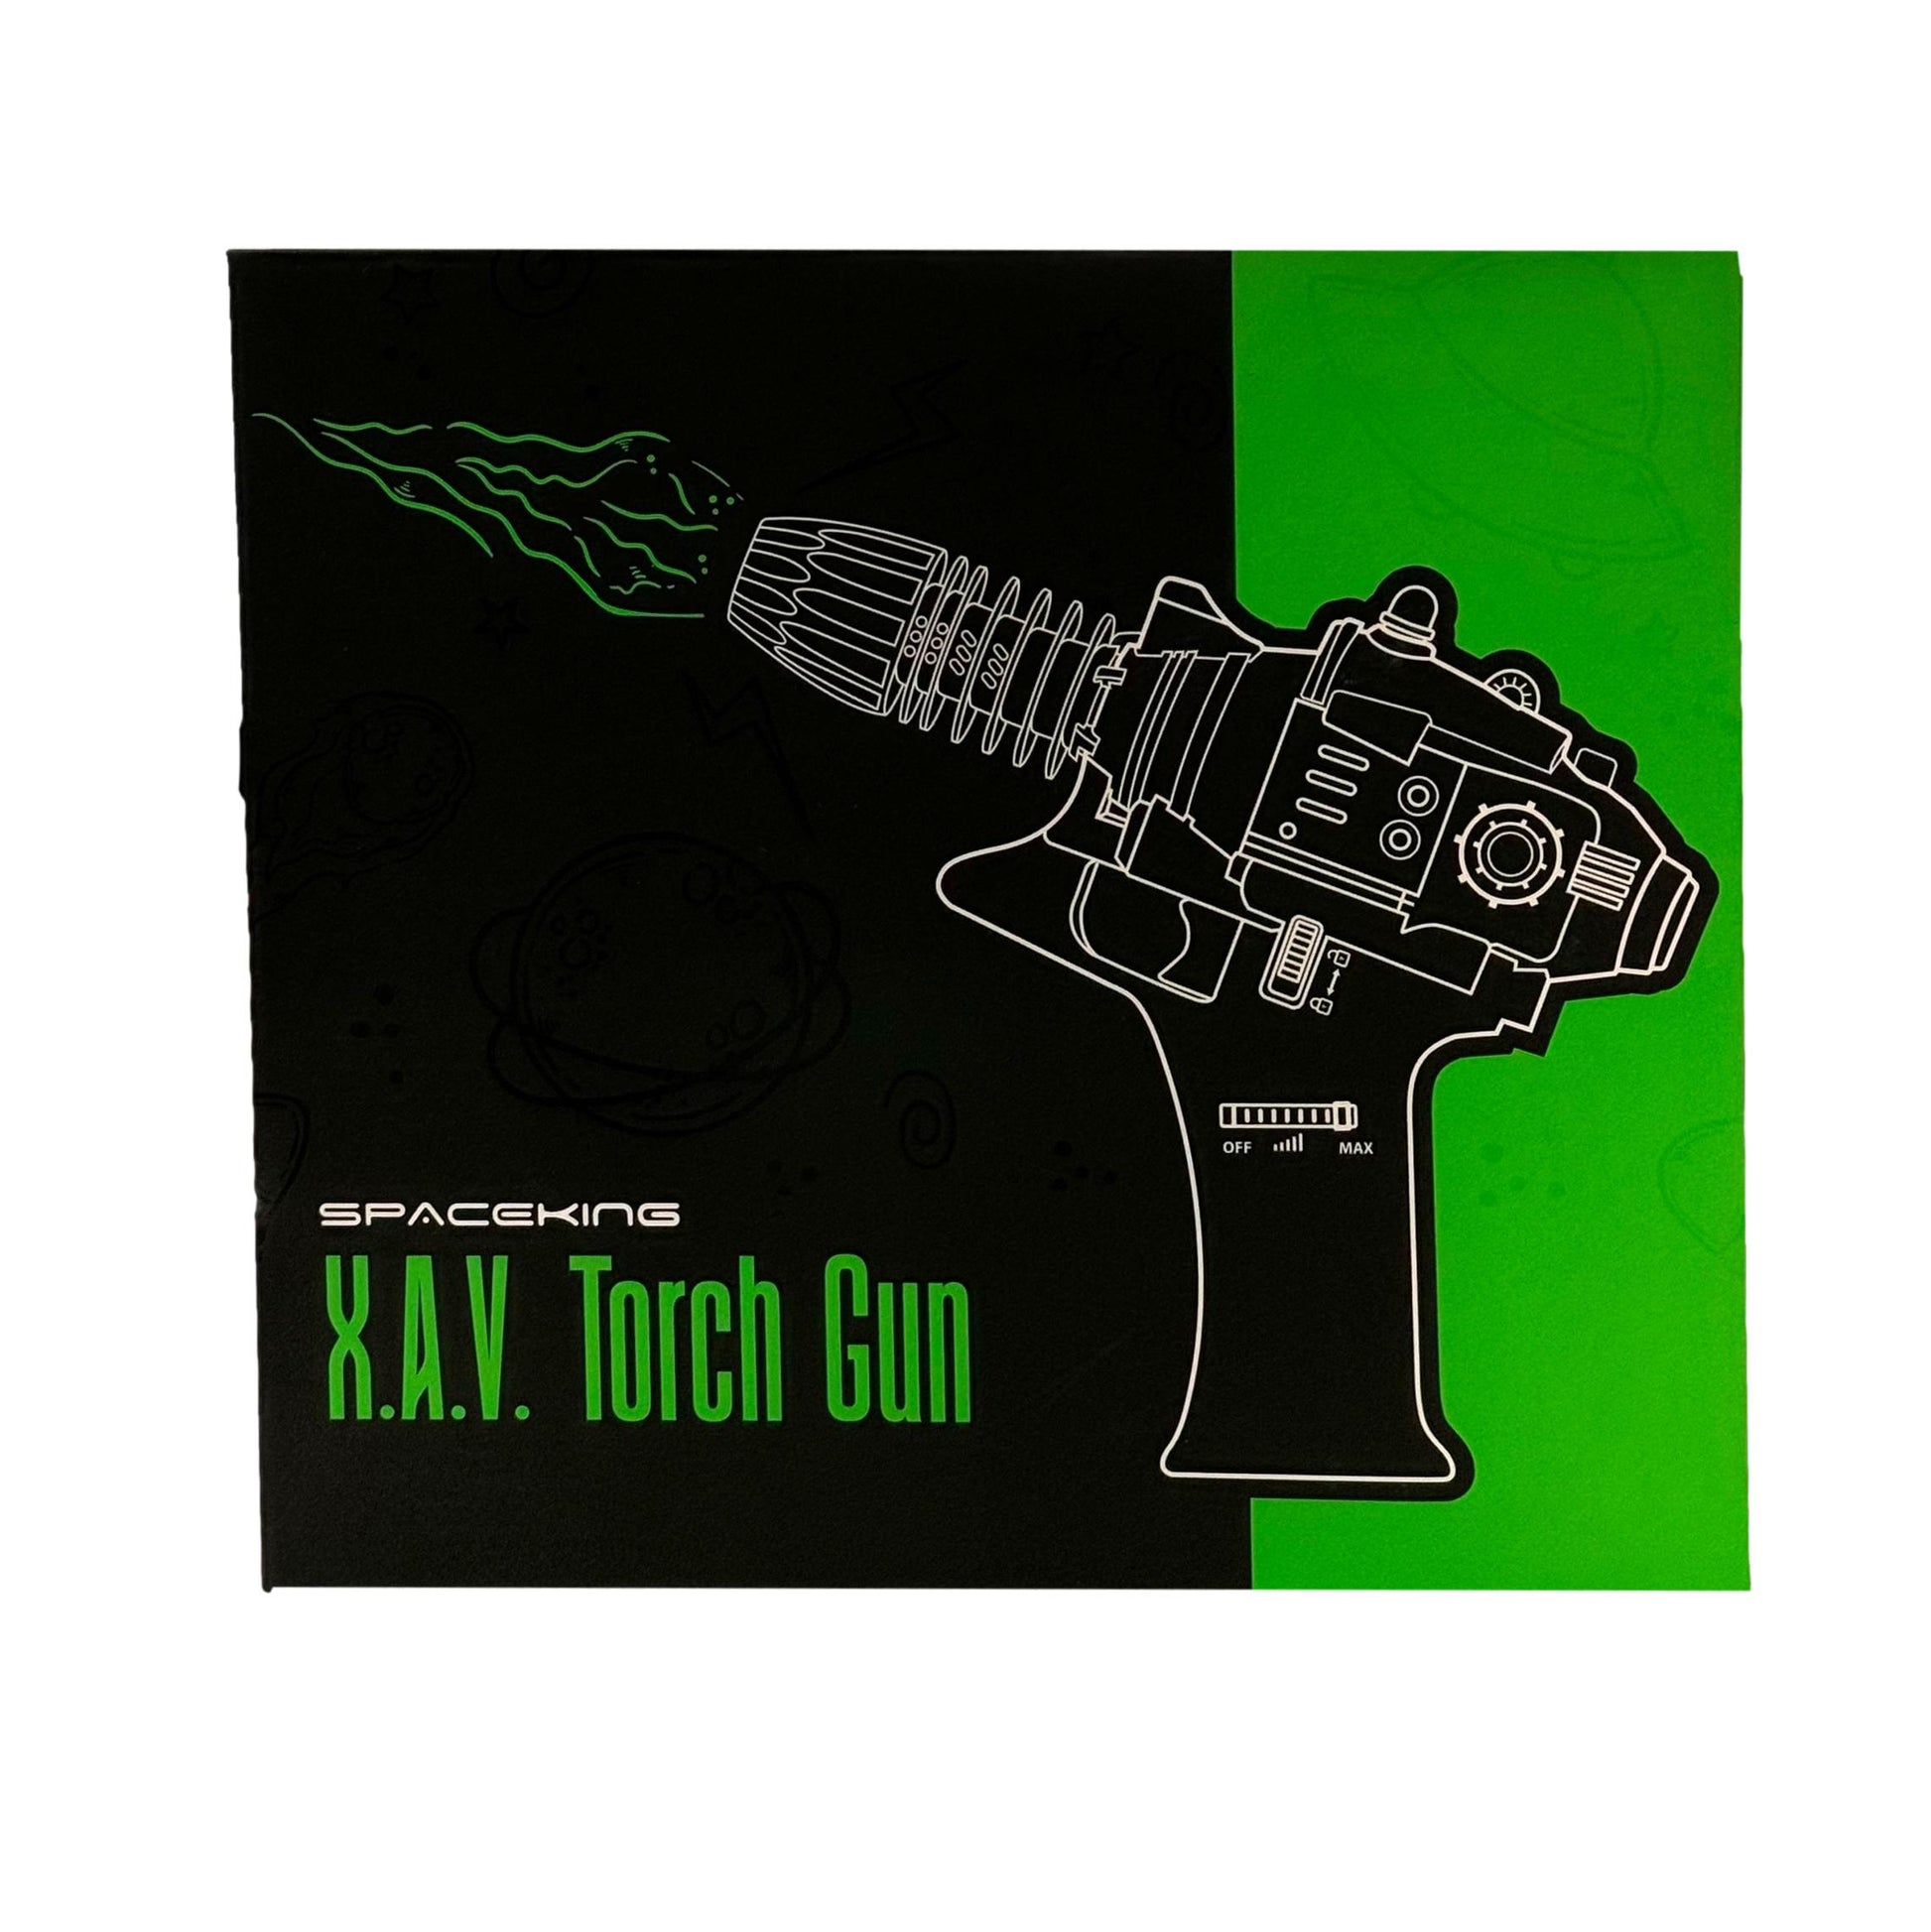 Spaceout X.A.V Torch Gun Green